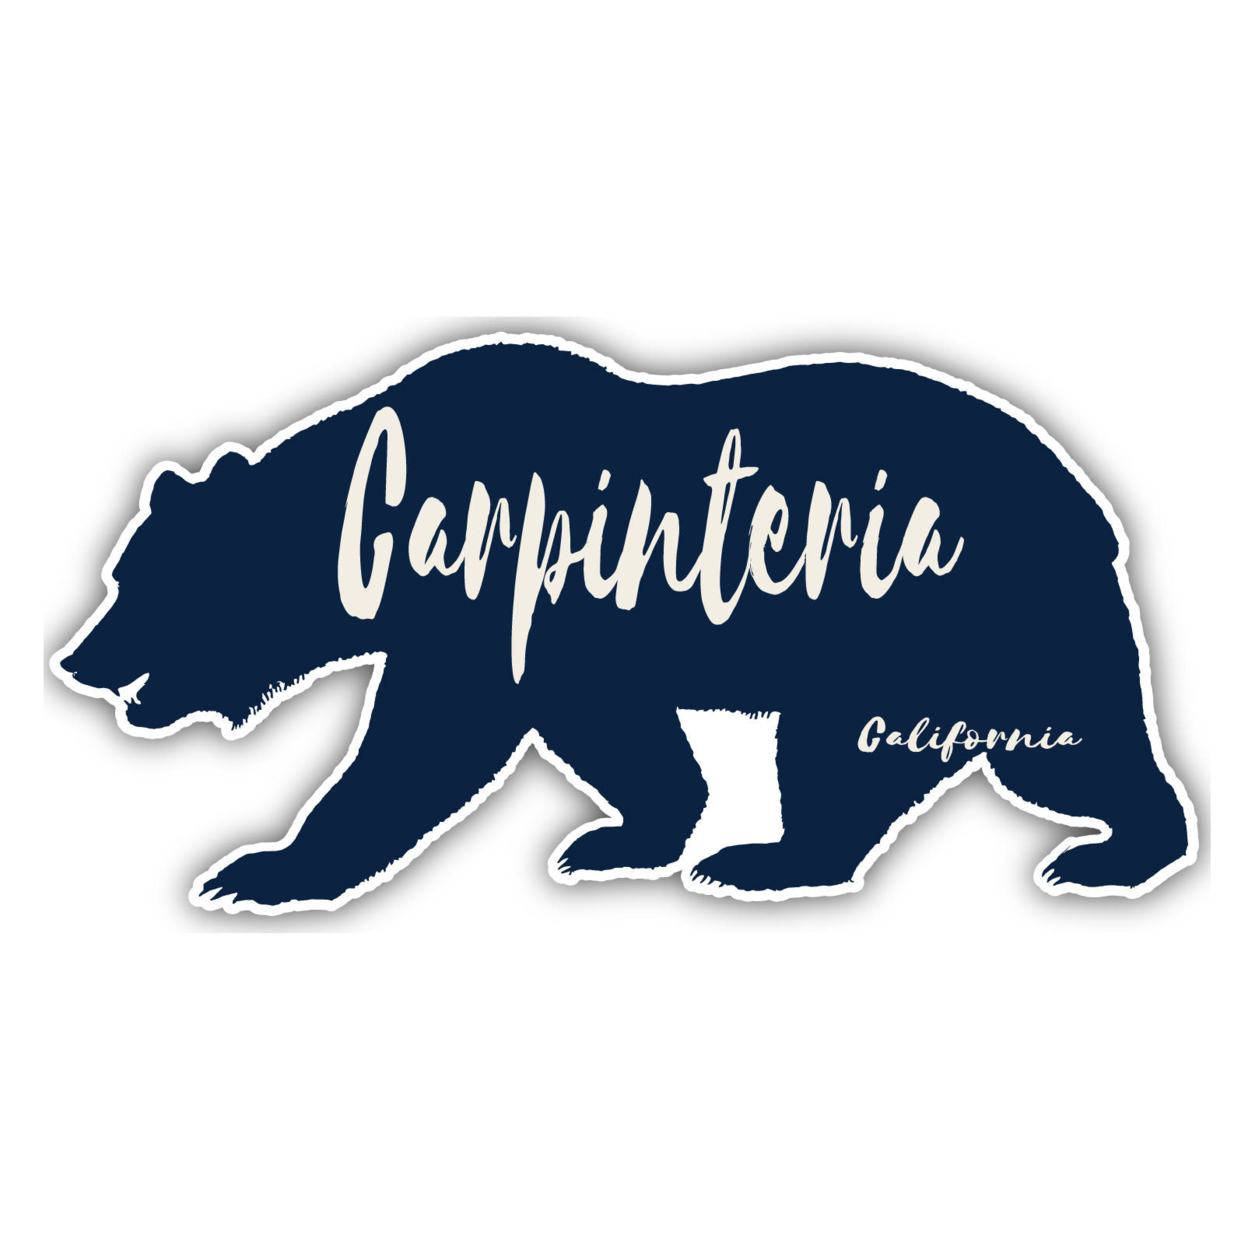 Carpinteria California Souvenir Decorative Stickers (Choose Theme And Size) - Single Unit, 4-Inch, Tent